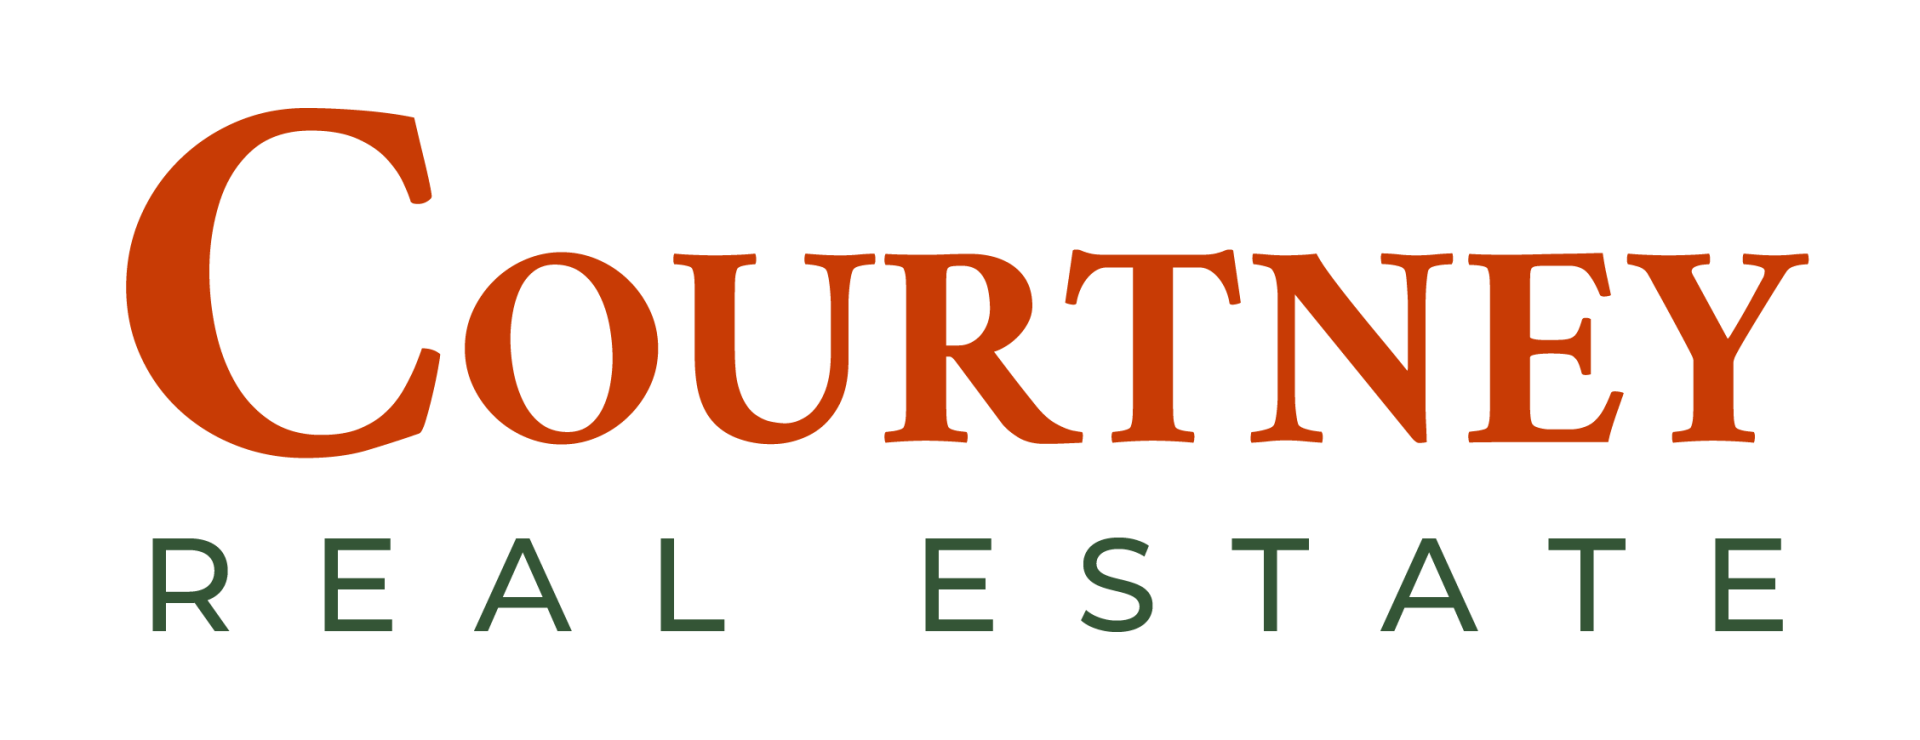 Courtney Real Estate Logo